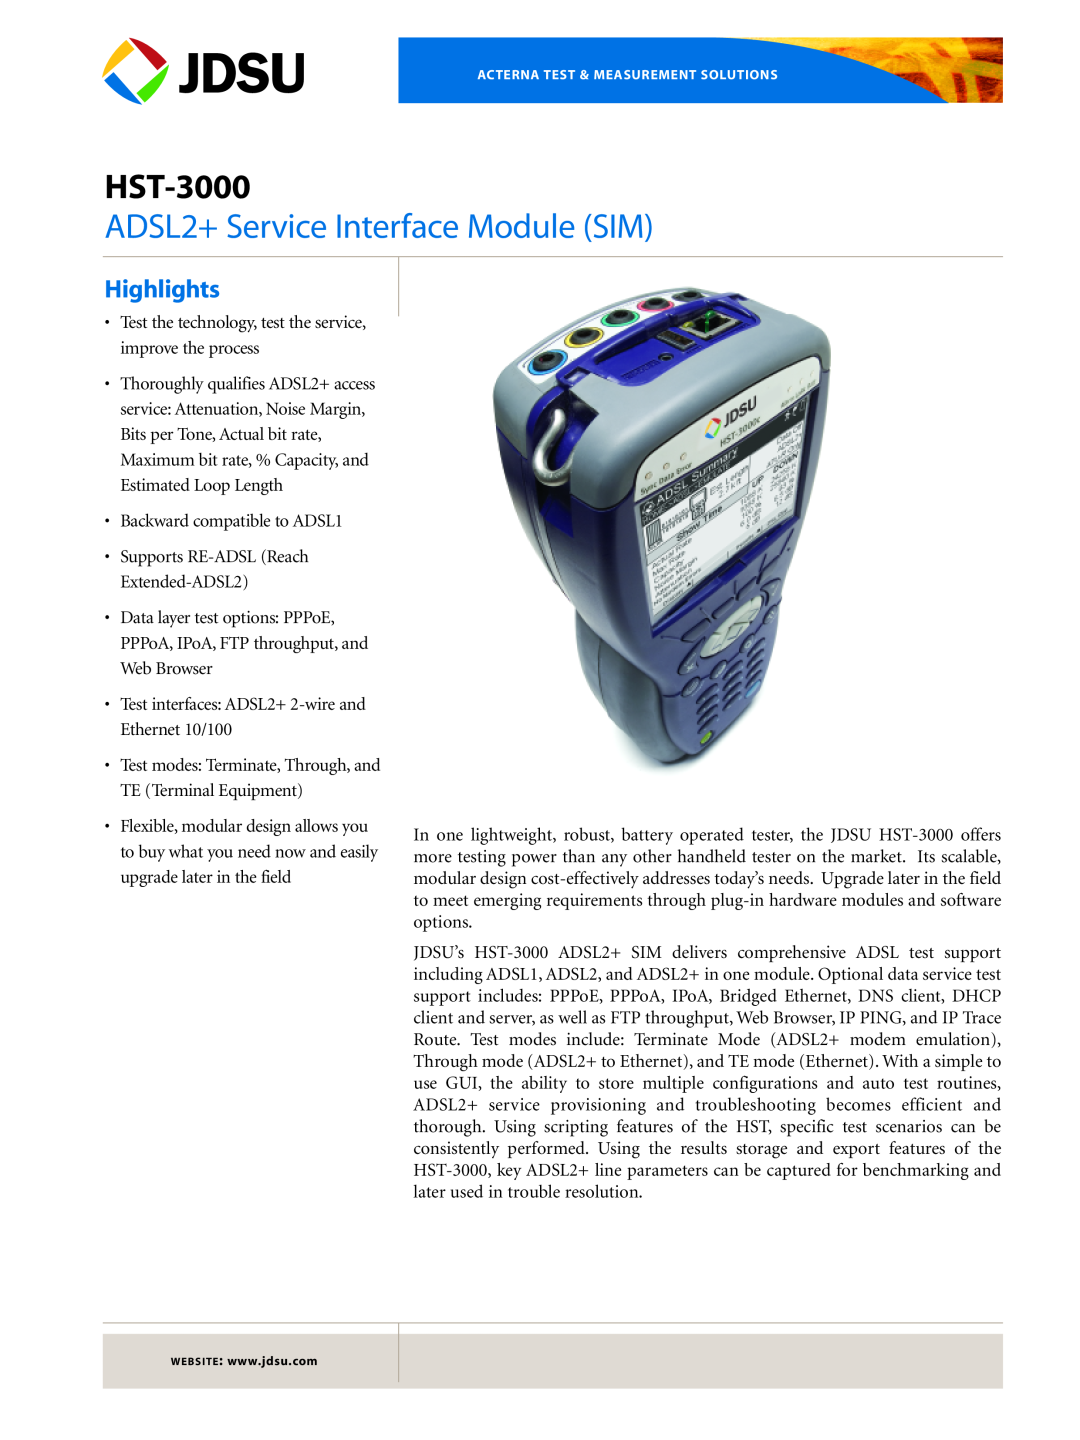 JDS Uniphase HST-3000 manual ADSL2+ Service Interface Module SIM, Highlights 